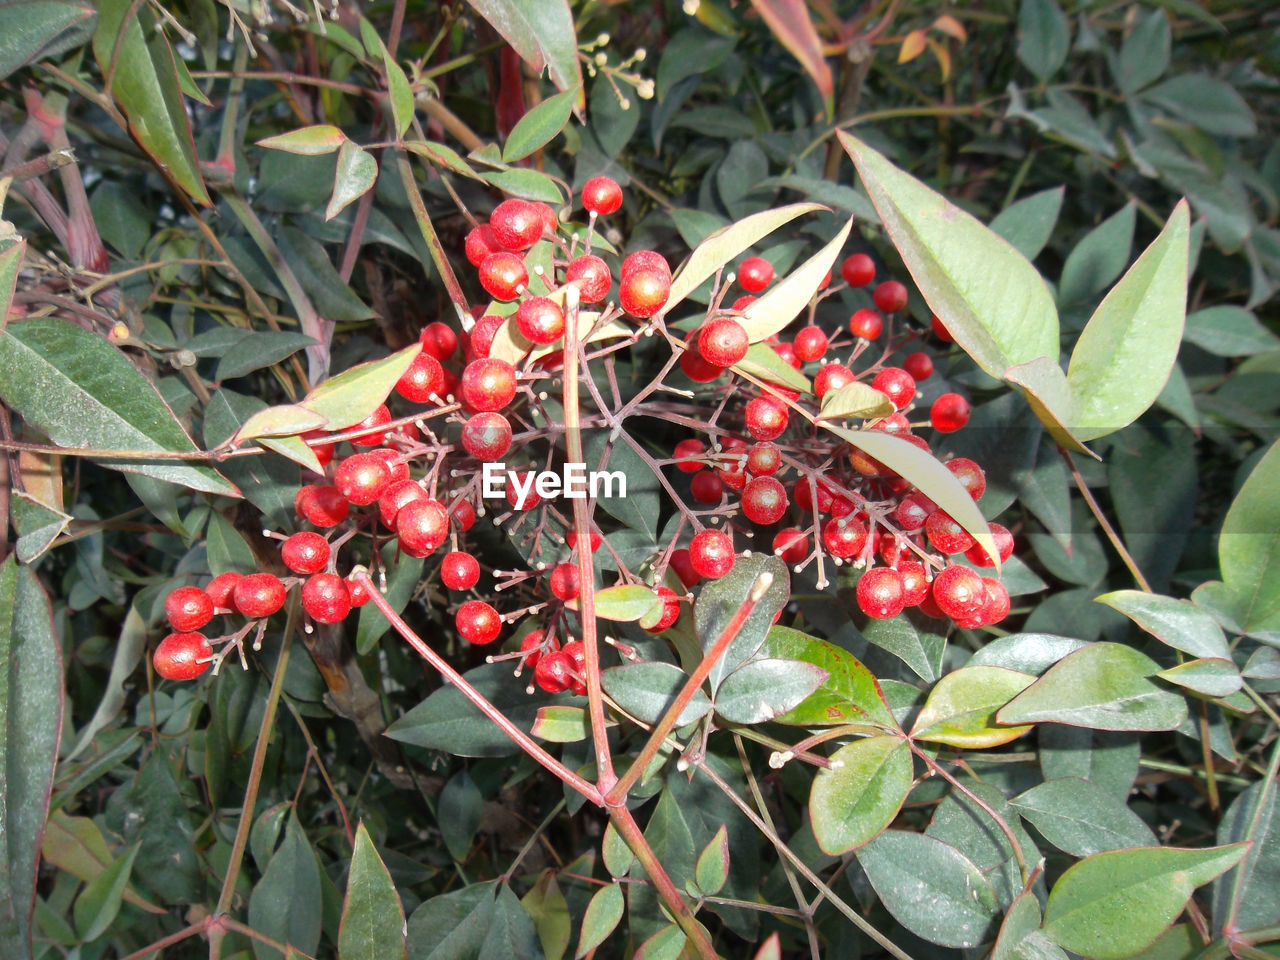 Bush of red berries